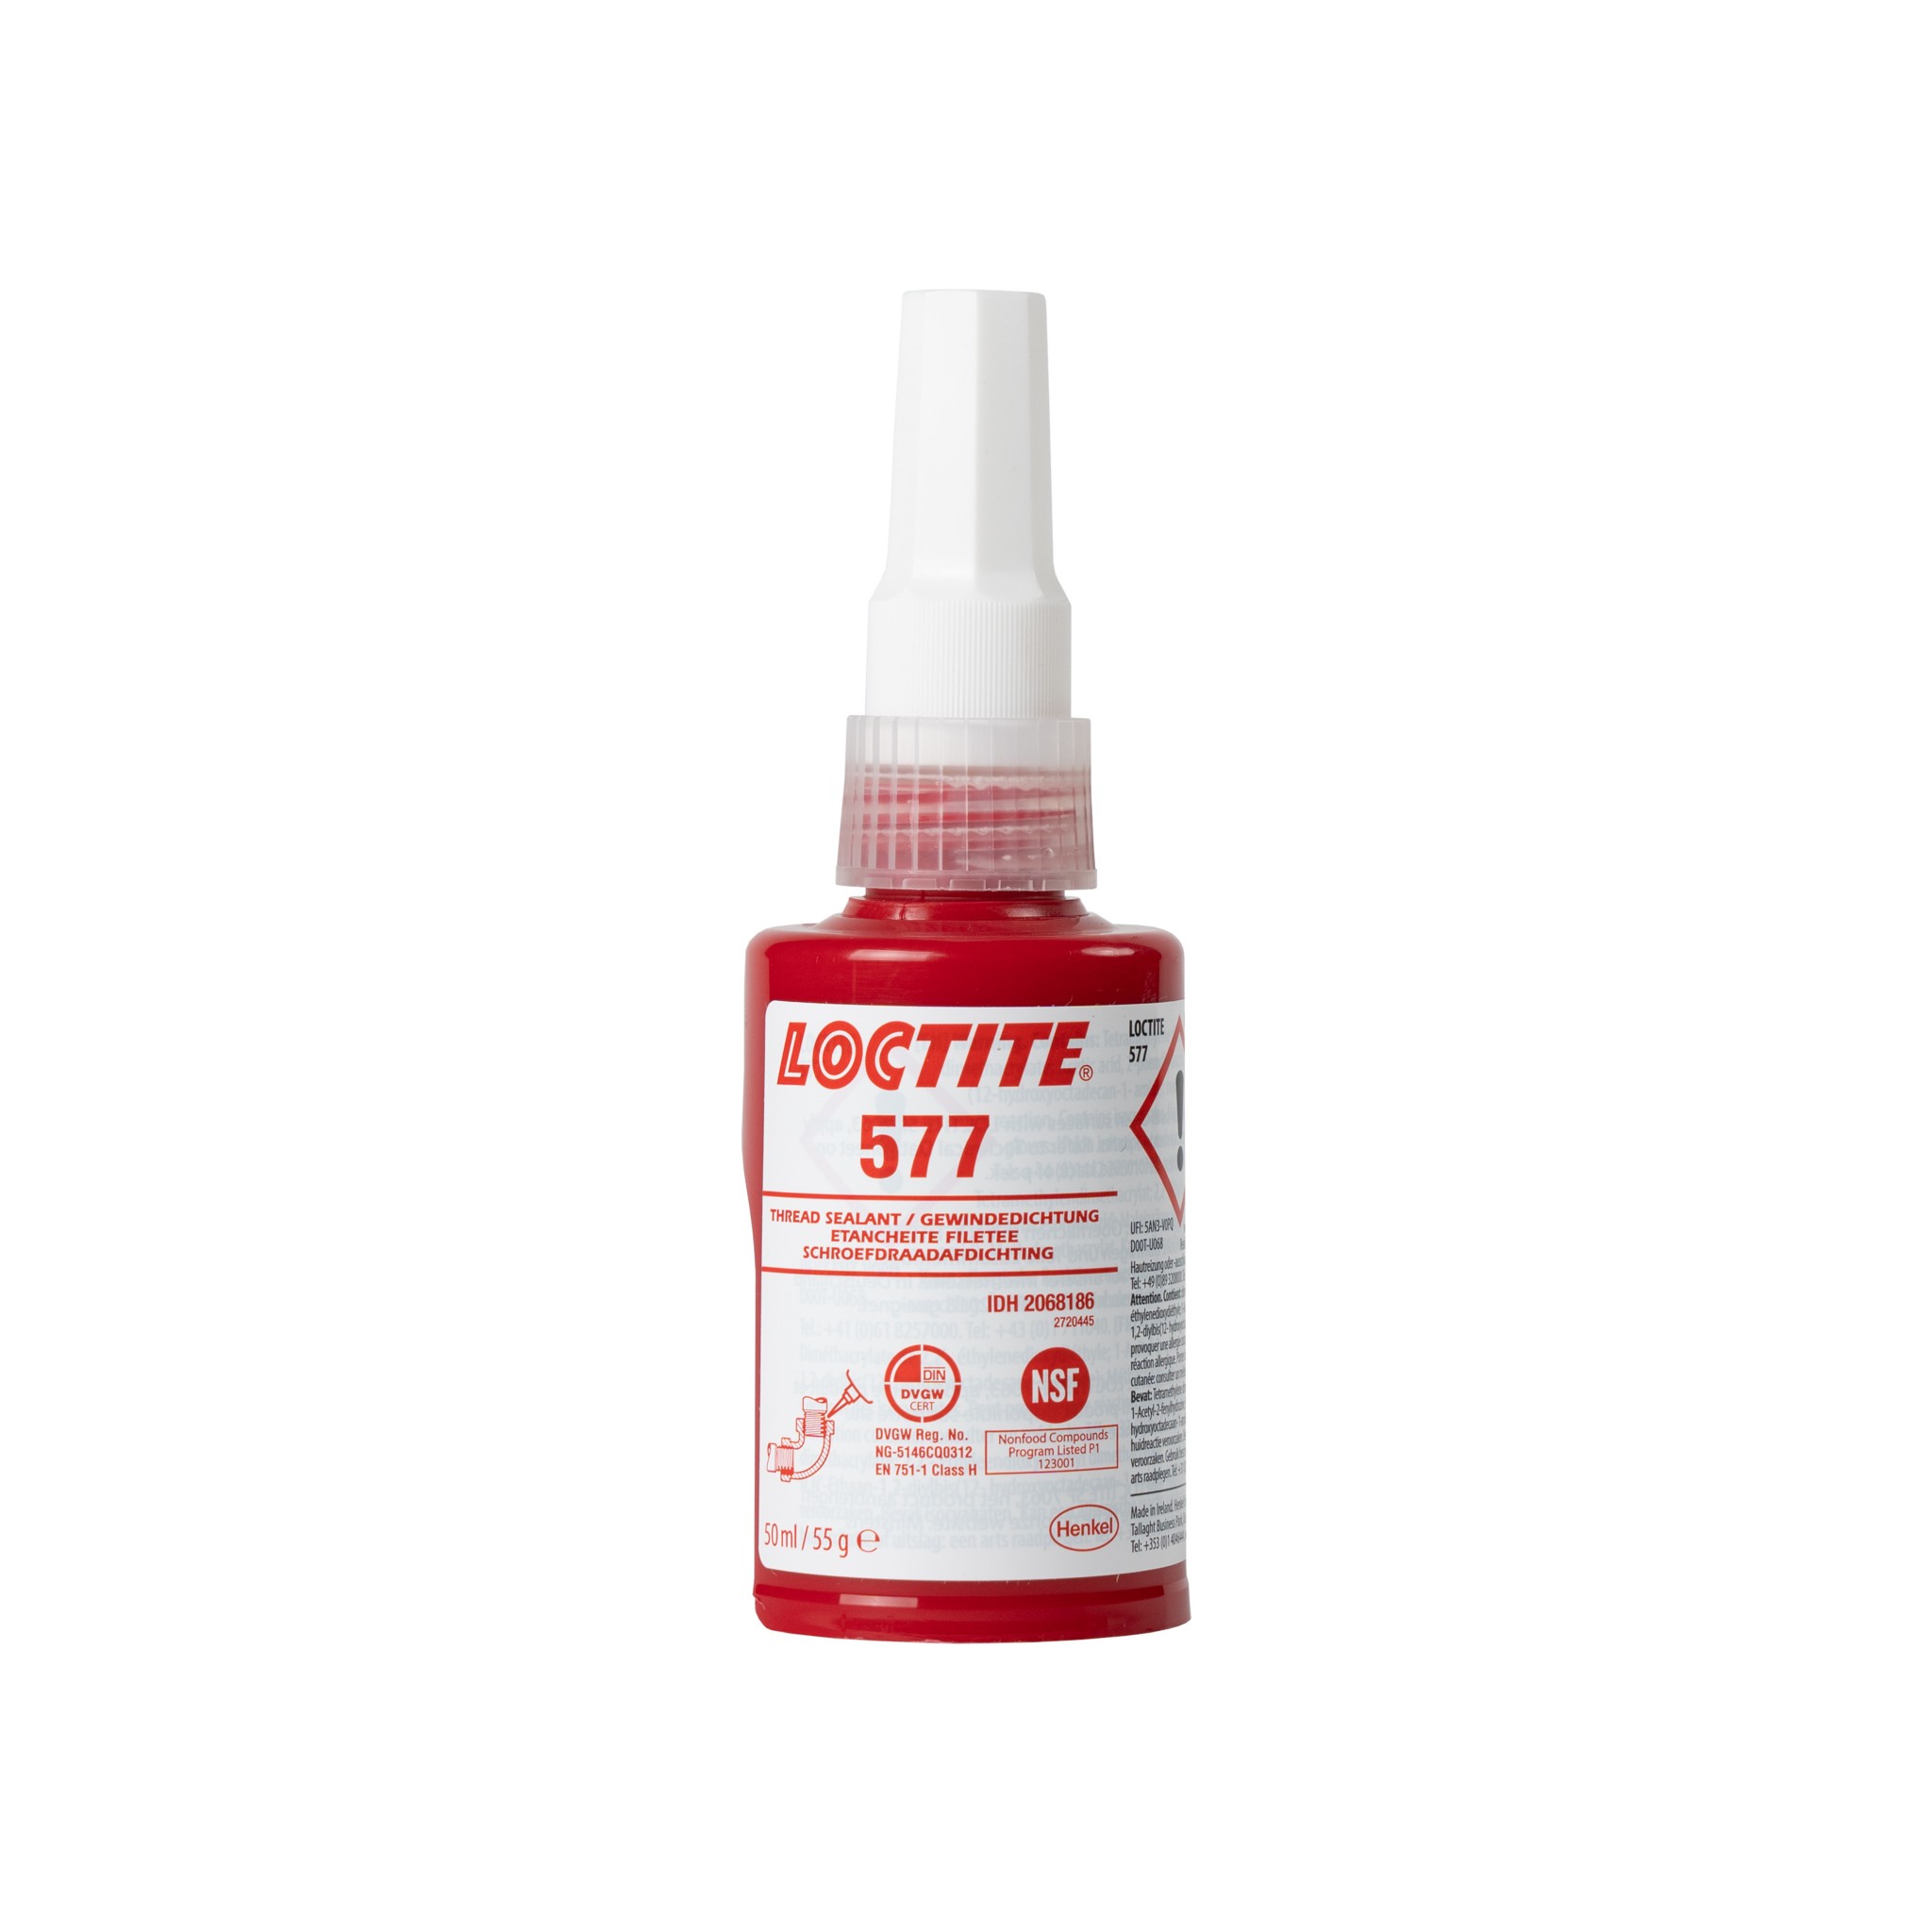 LOCTITE 577 - Thread Sealant - Henkel Adhesives